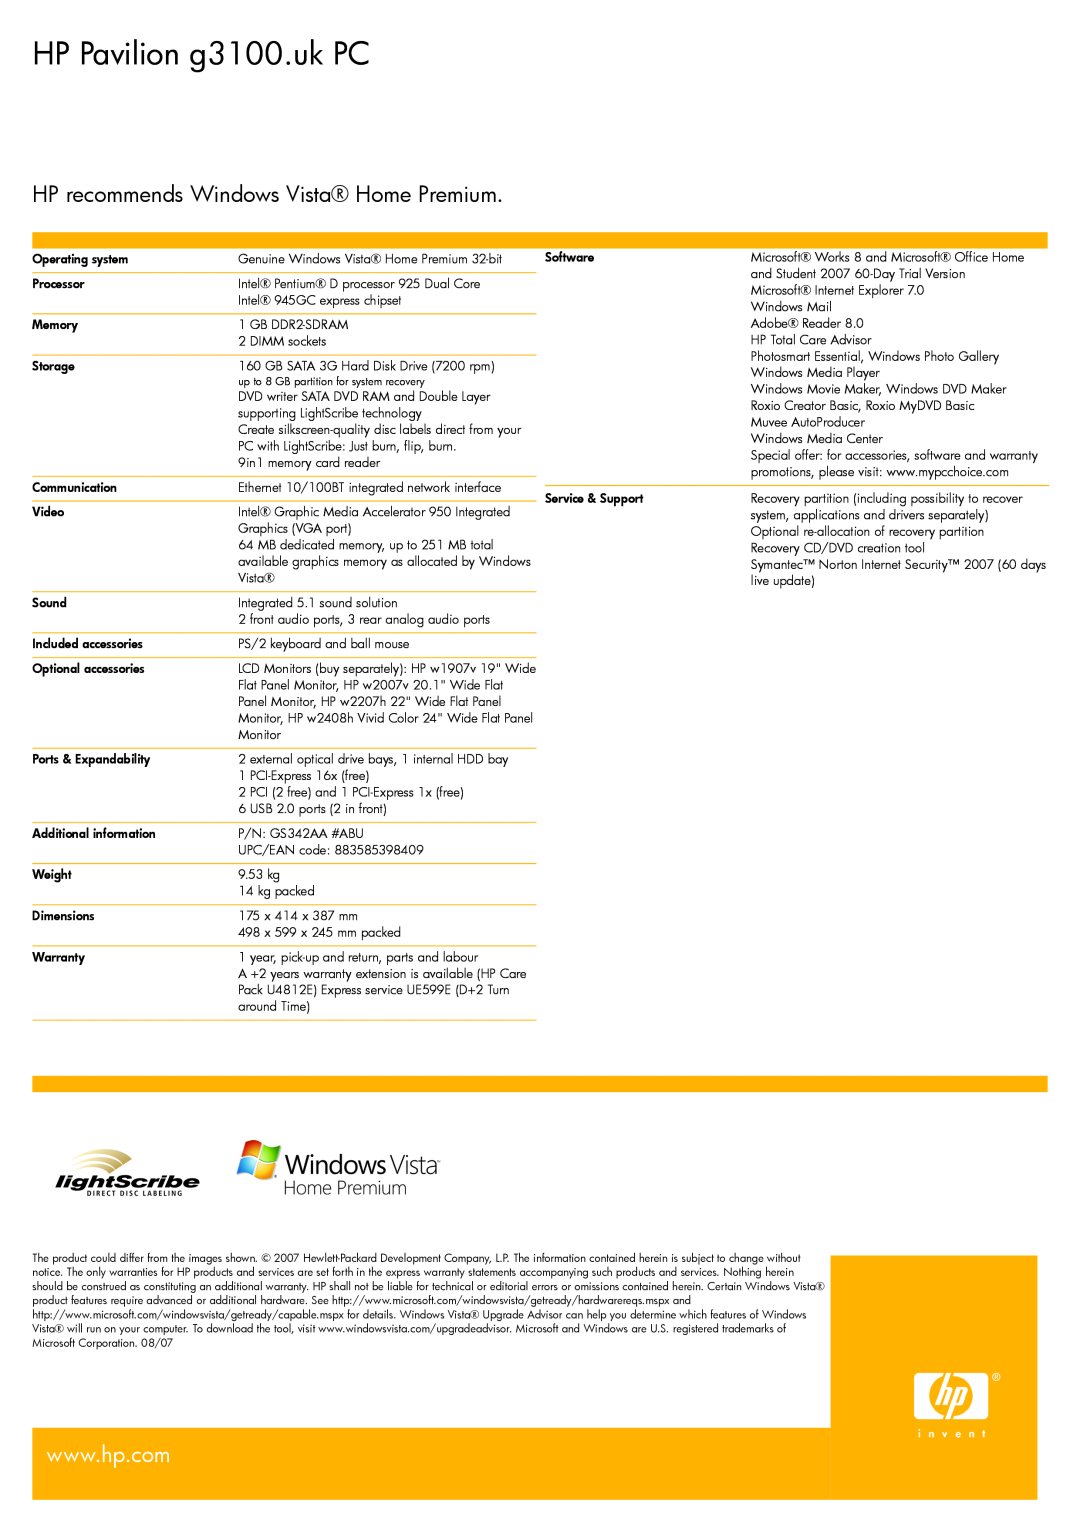 BT manual HP Pavilion g3100.uk PC, HP recommends Windows Vista Home Premium, Operating system 